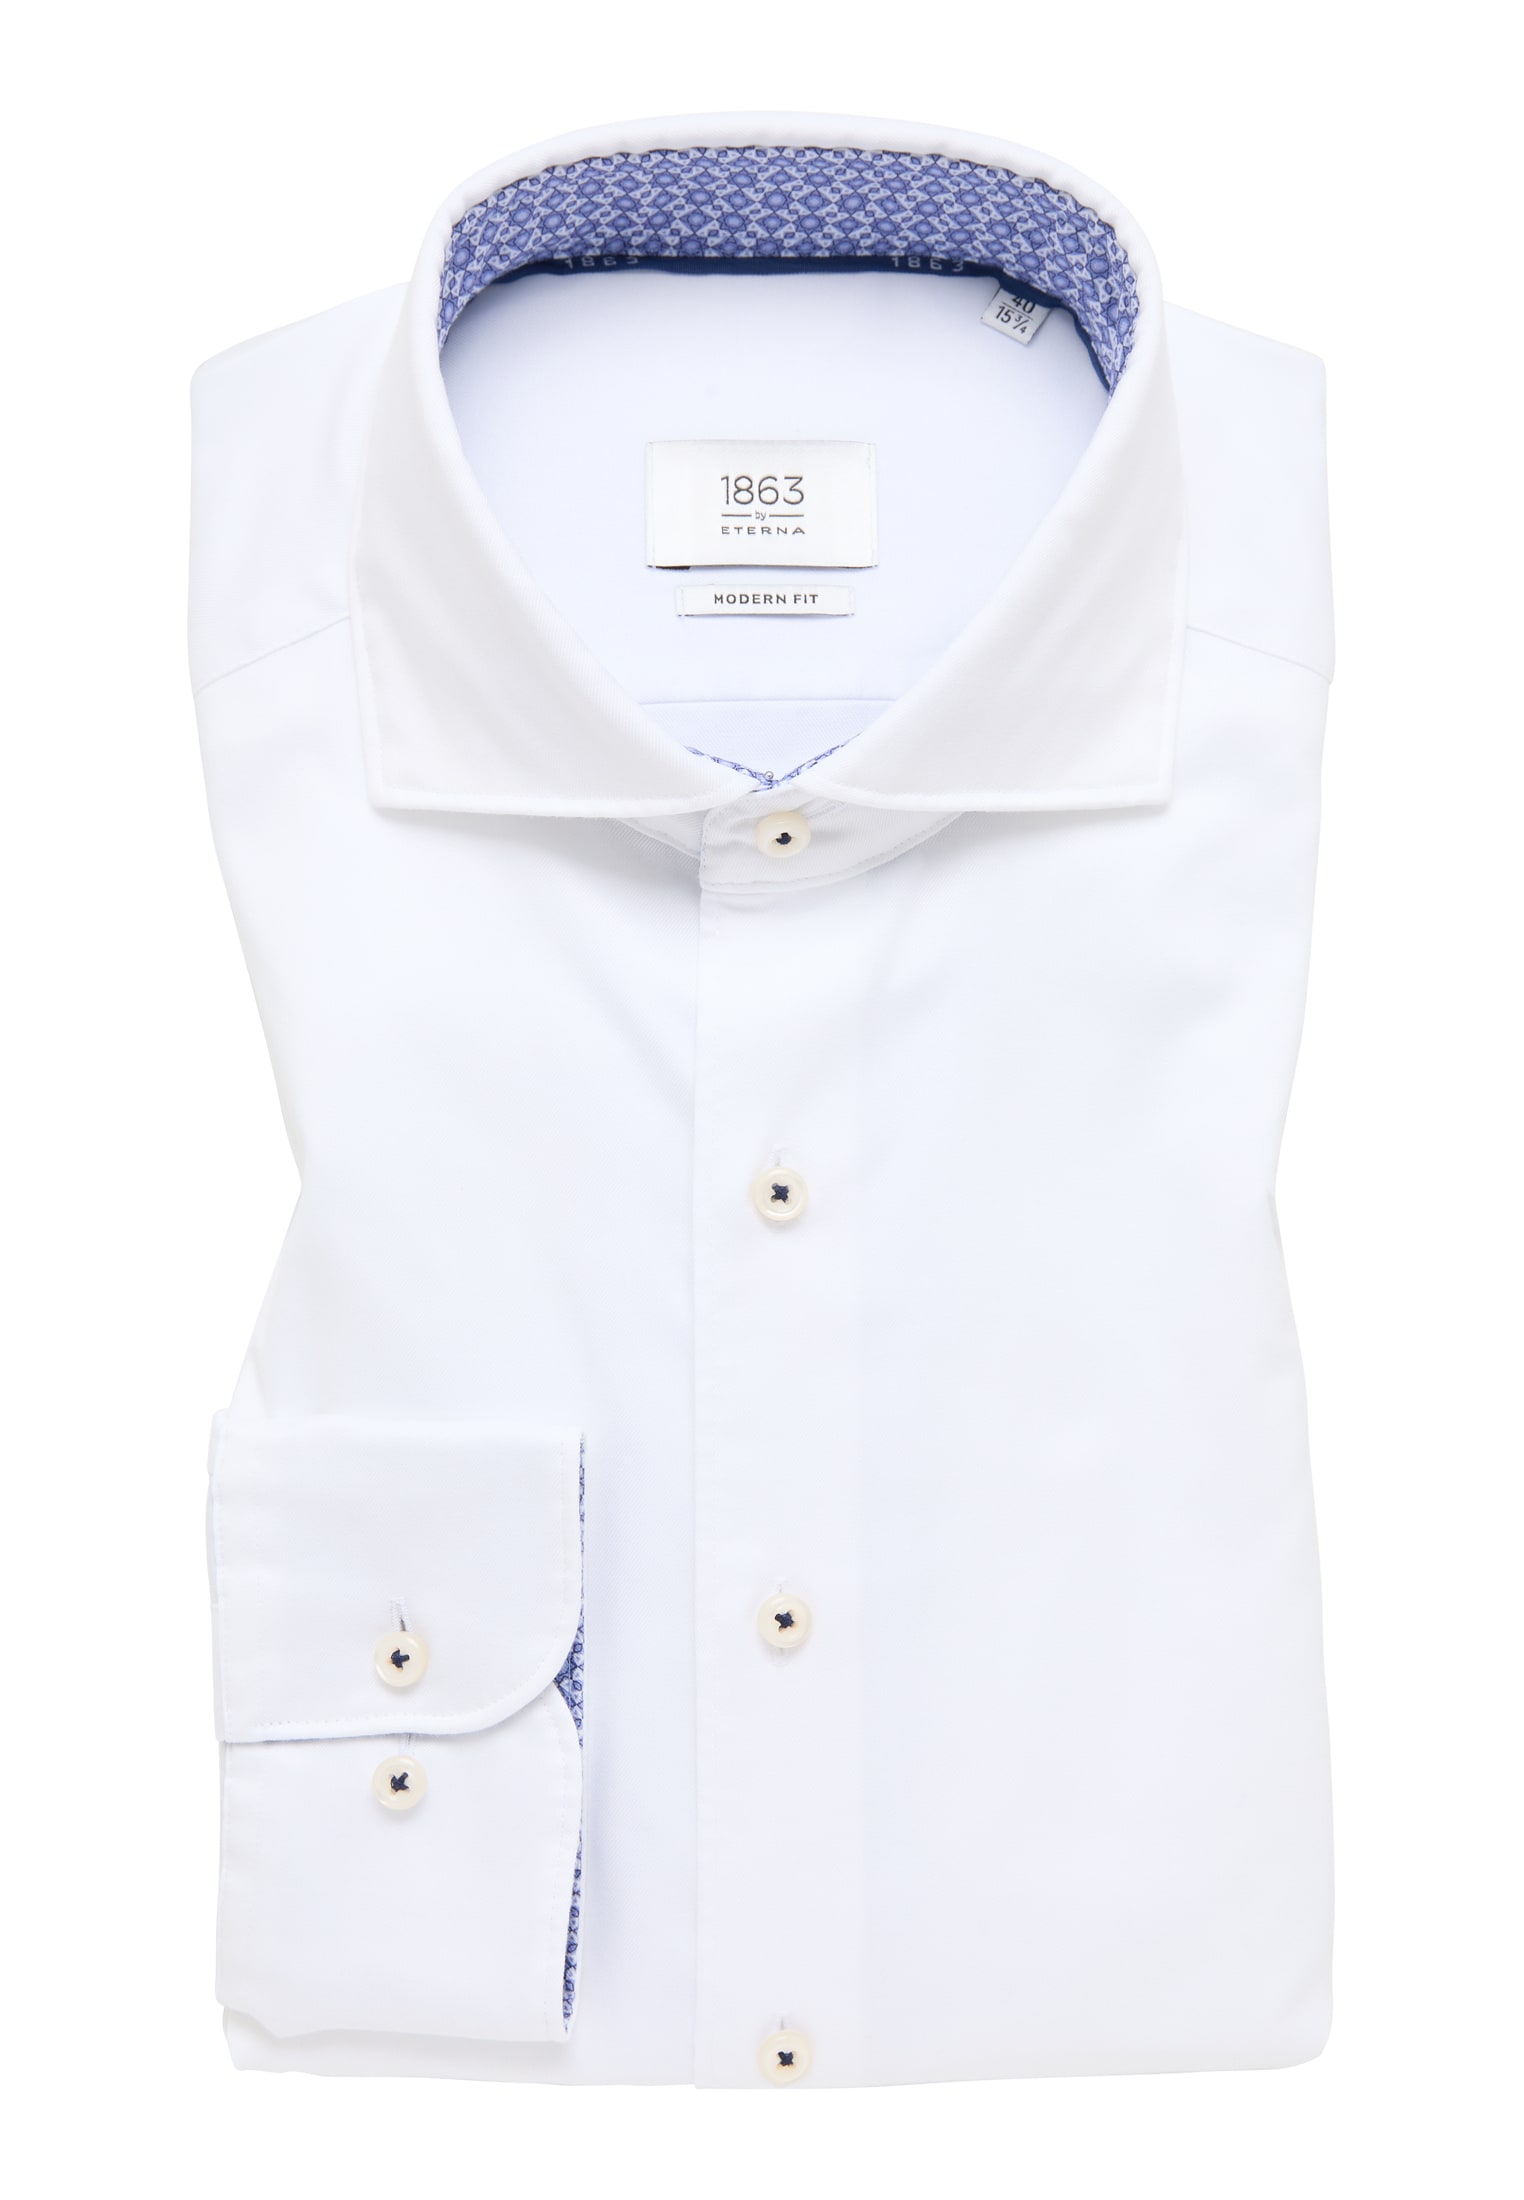 MODERN FIT Soft | 1SH11519-00-02-42-1/1 unifarben in off-white | | Shirt | Langarm Luxury 42 off-white